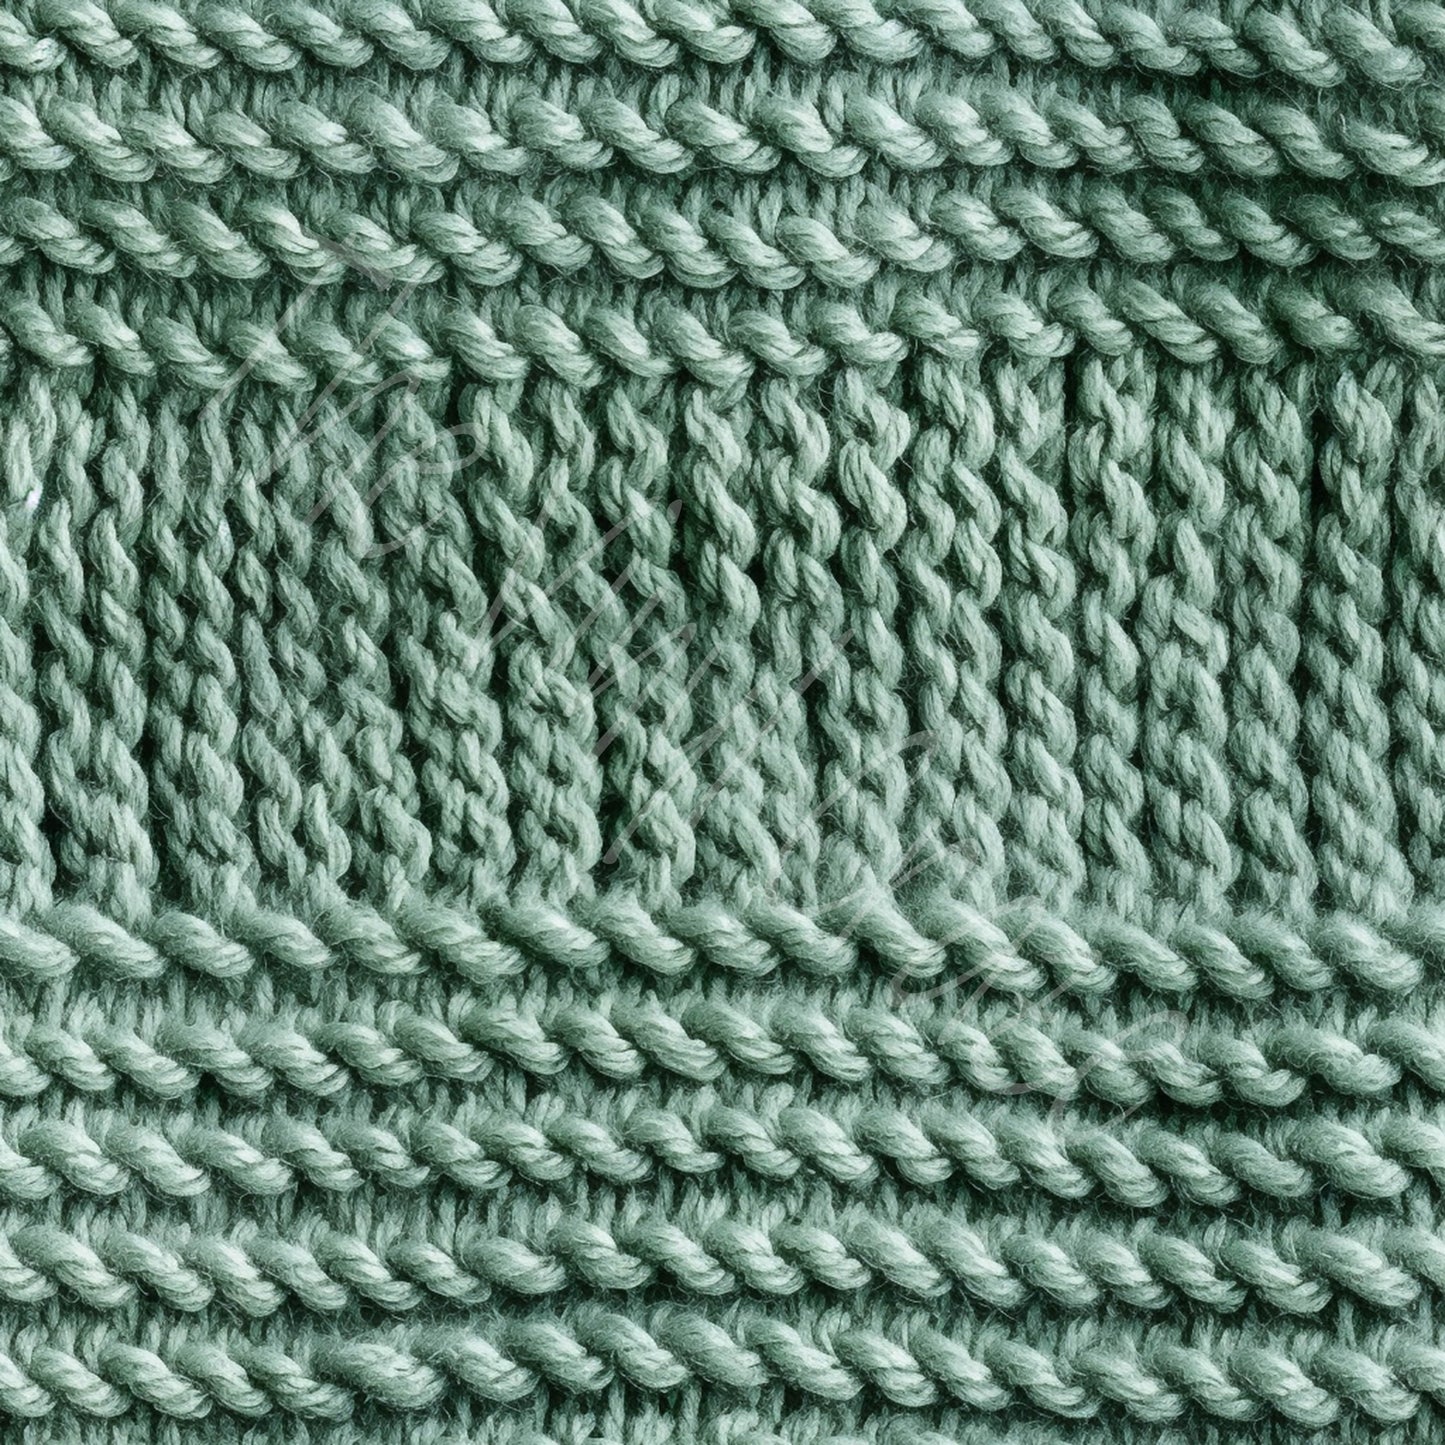 Sweater Textures - 14 Design options